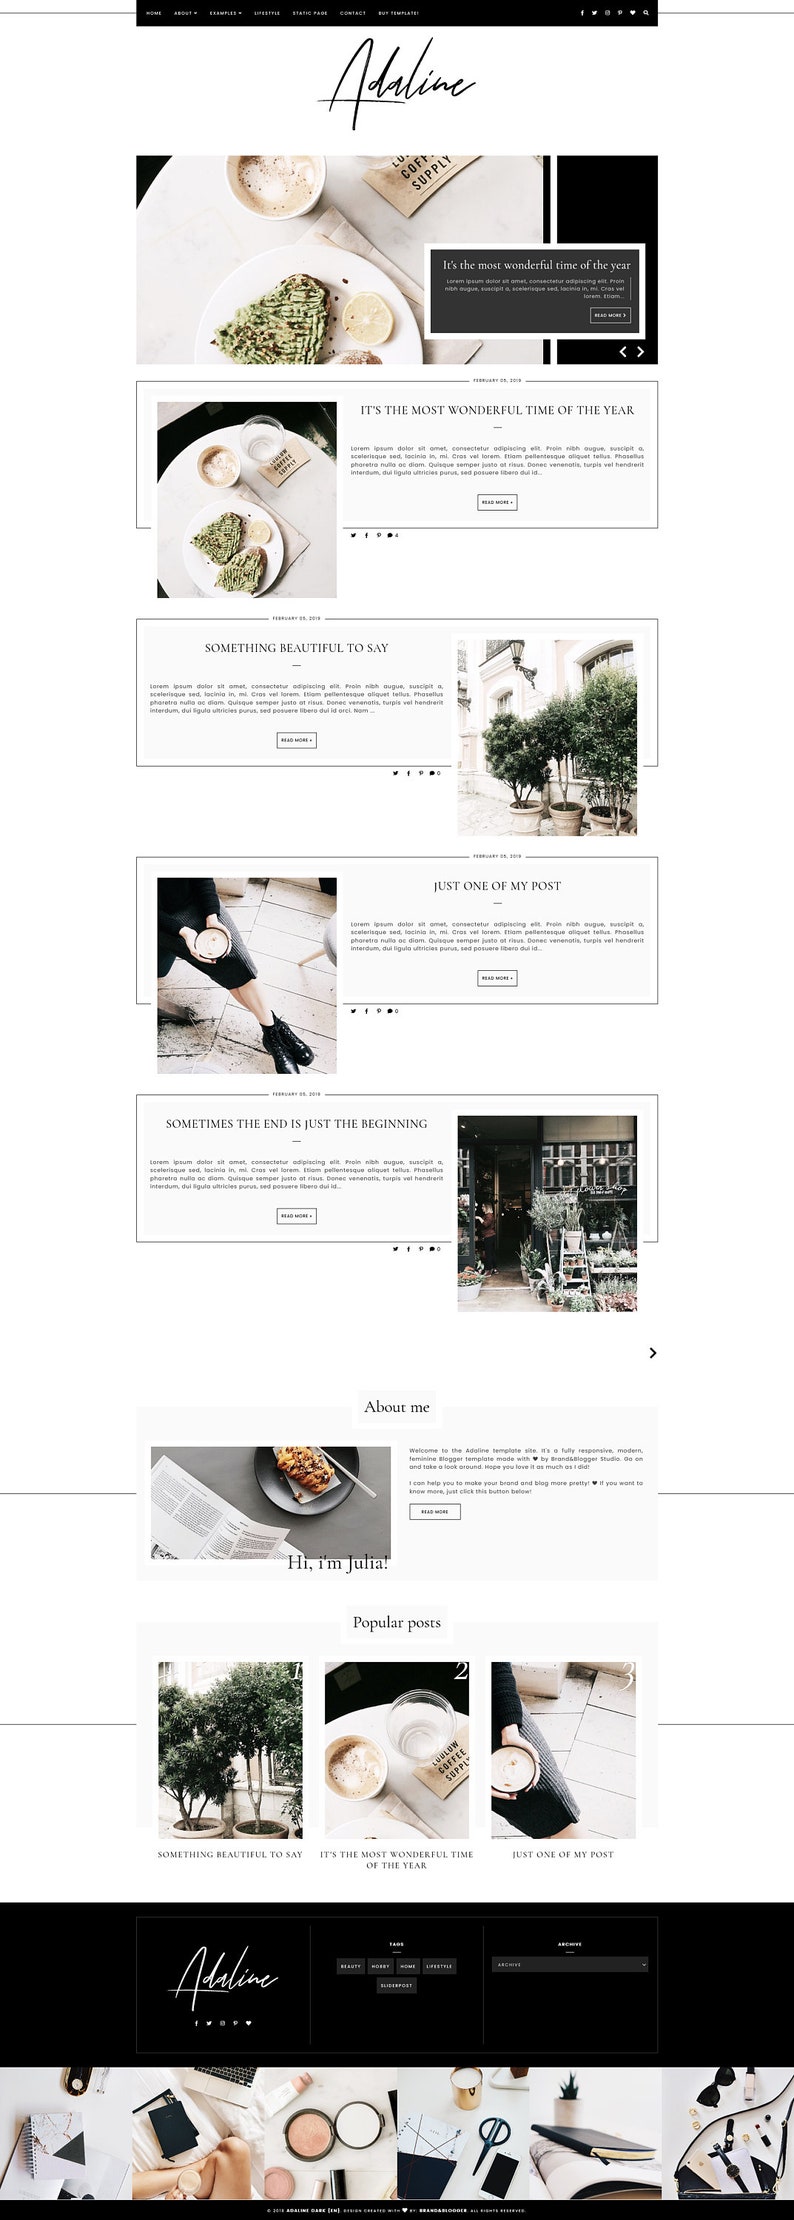 Adaline Dark Responsive Blogger template, fashion premium Blogger theme, slider lifestyle blog design, premade feminine Blogspot layout image 2